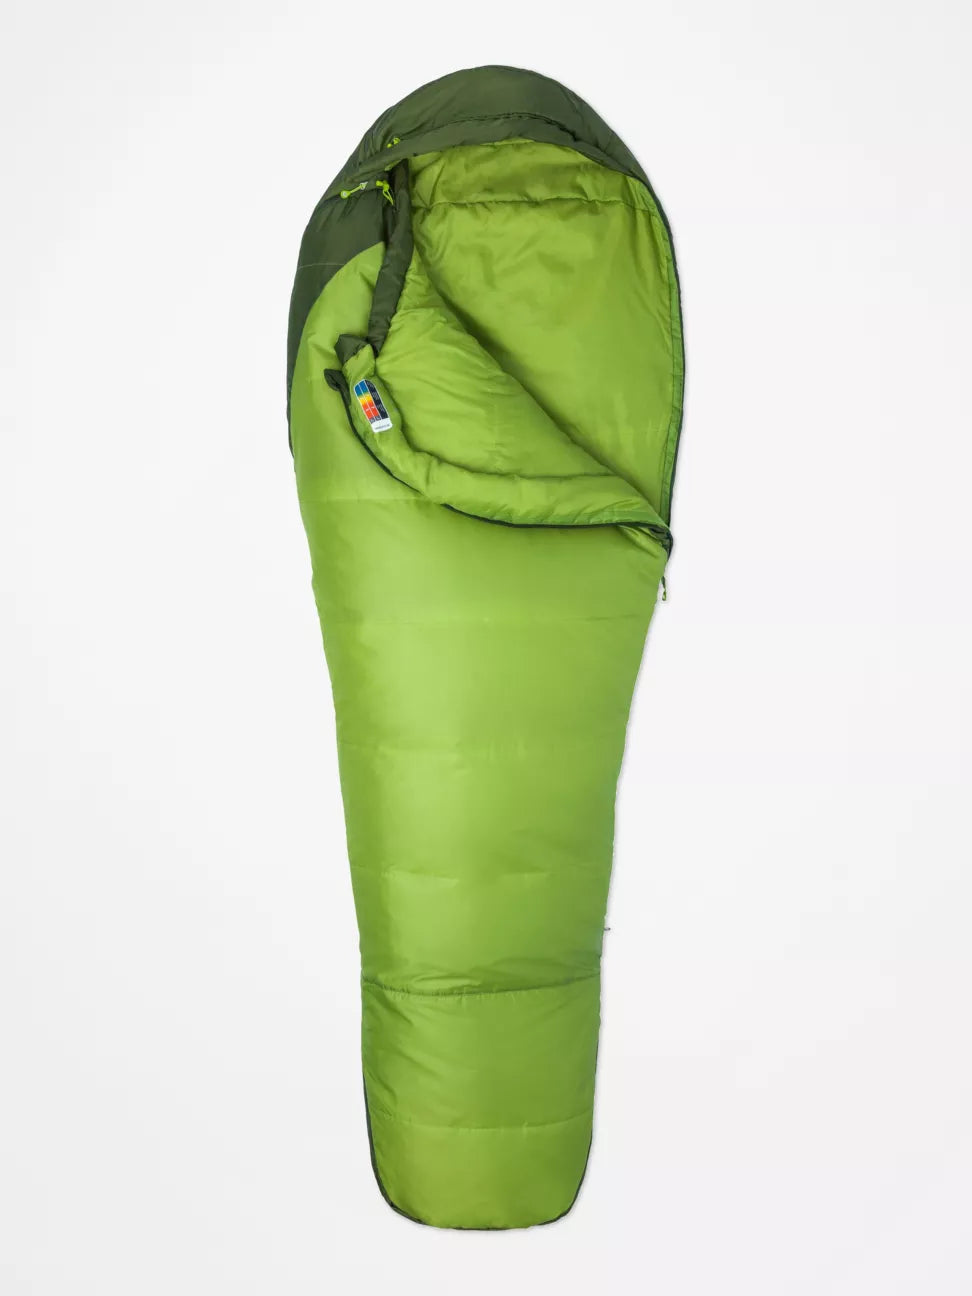 Partially zipped bright green mummy bag, unisex 30 degree 